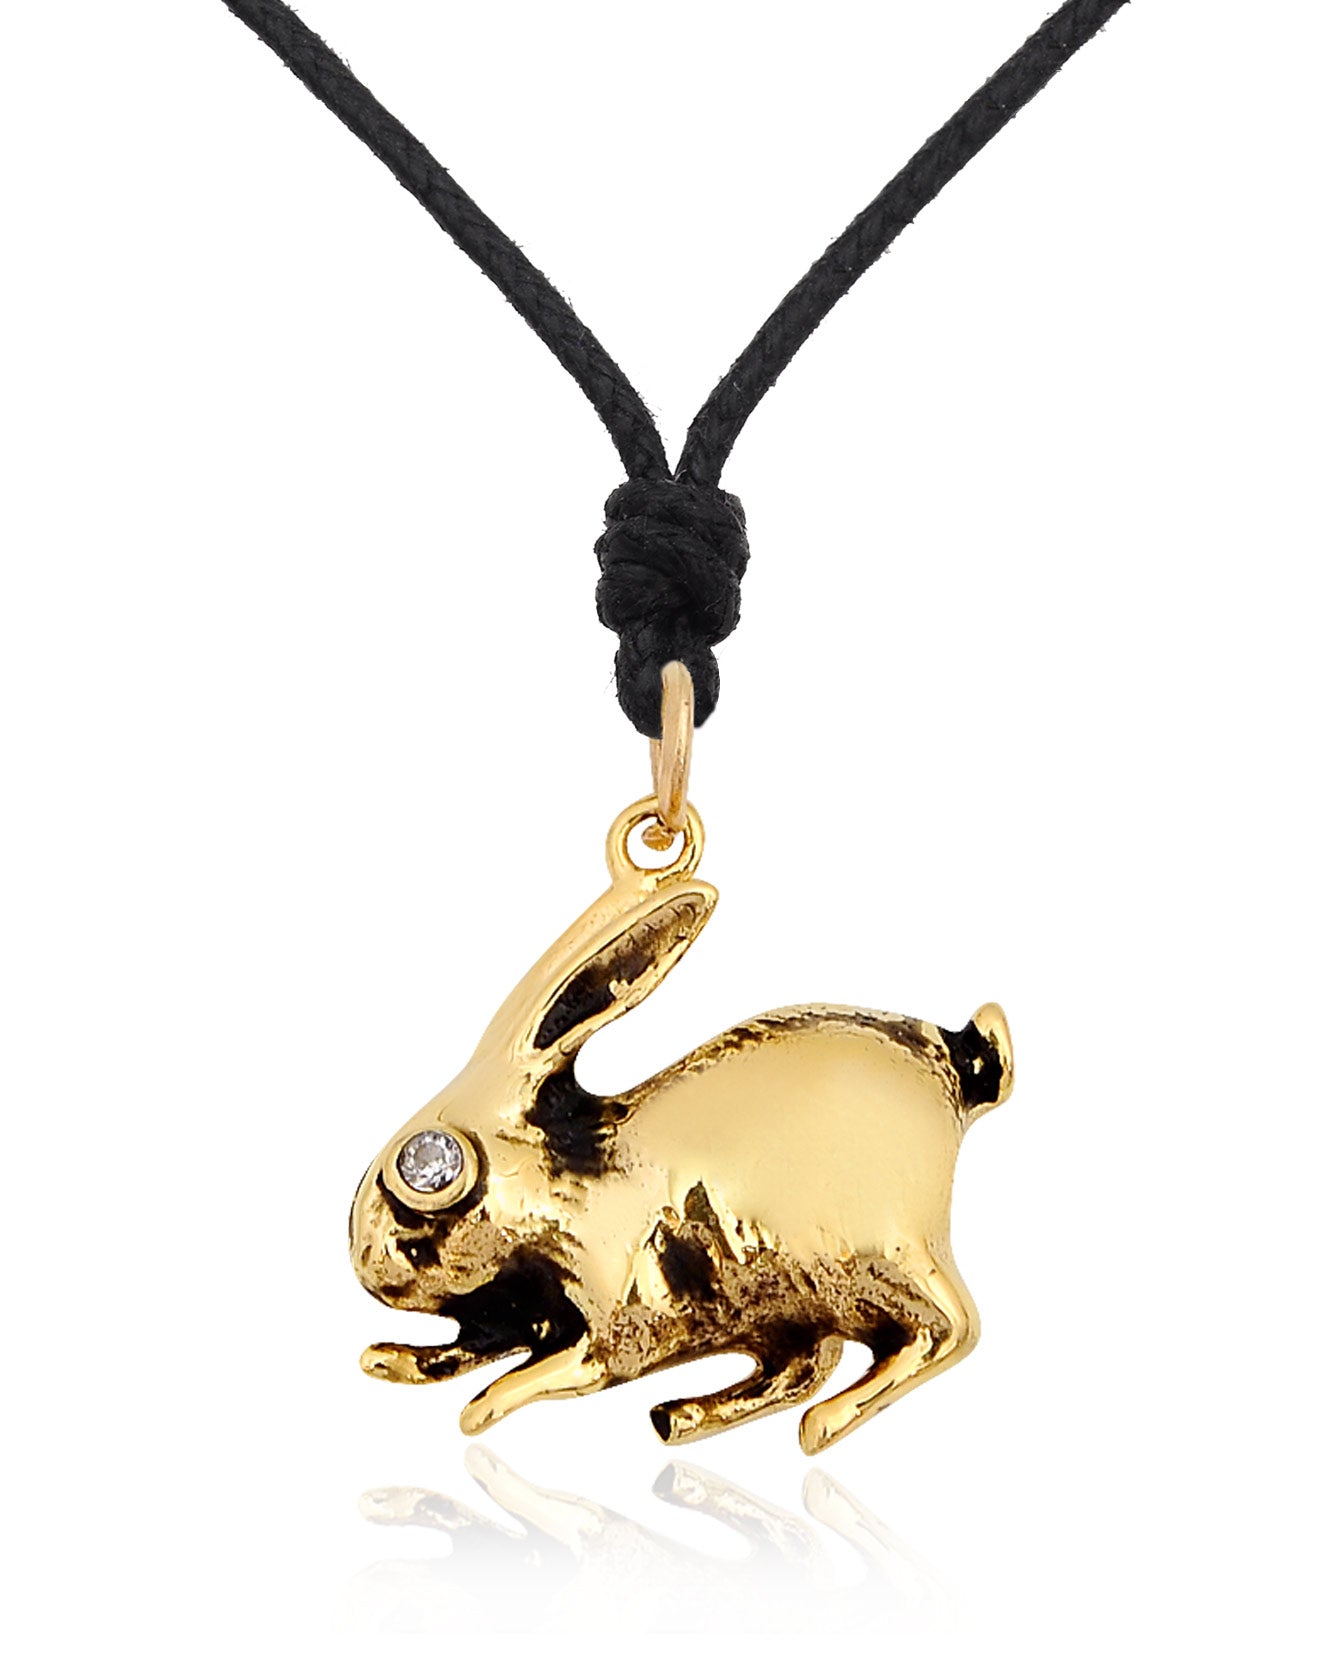 Rabbit Handmade Brass Necklace Pendant Jewelry